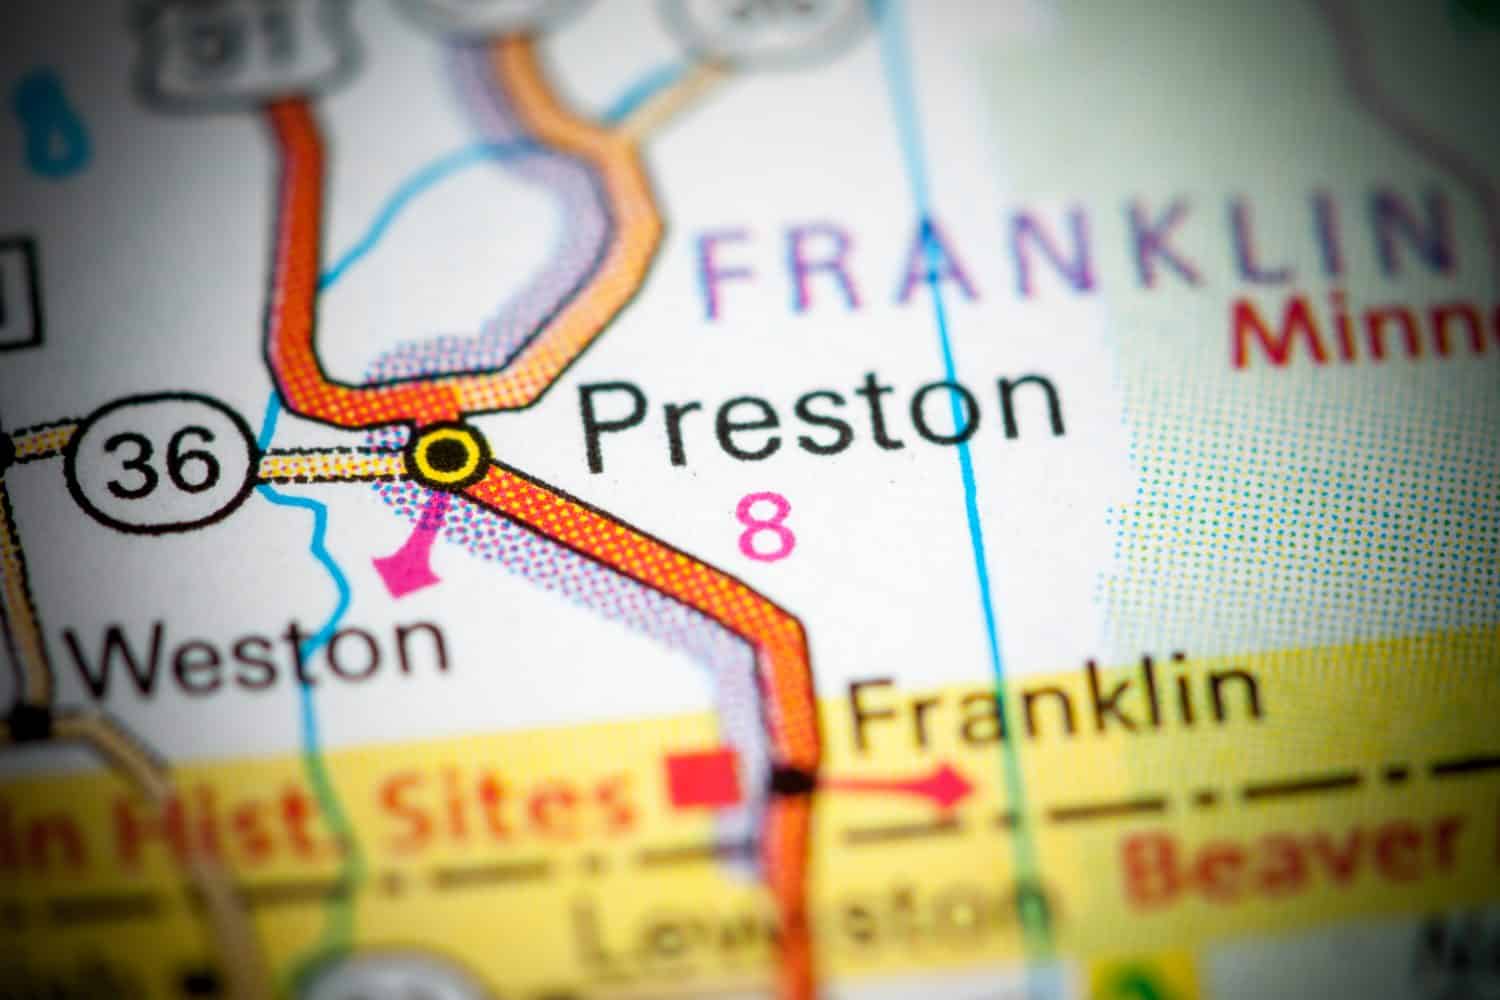 Preston. Idaho. USA on a map.